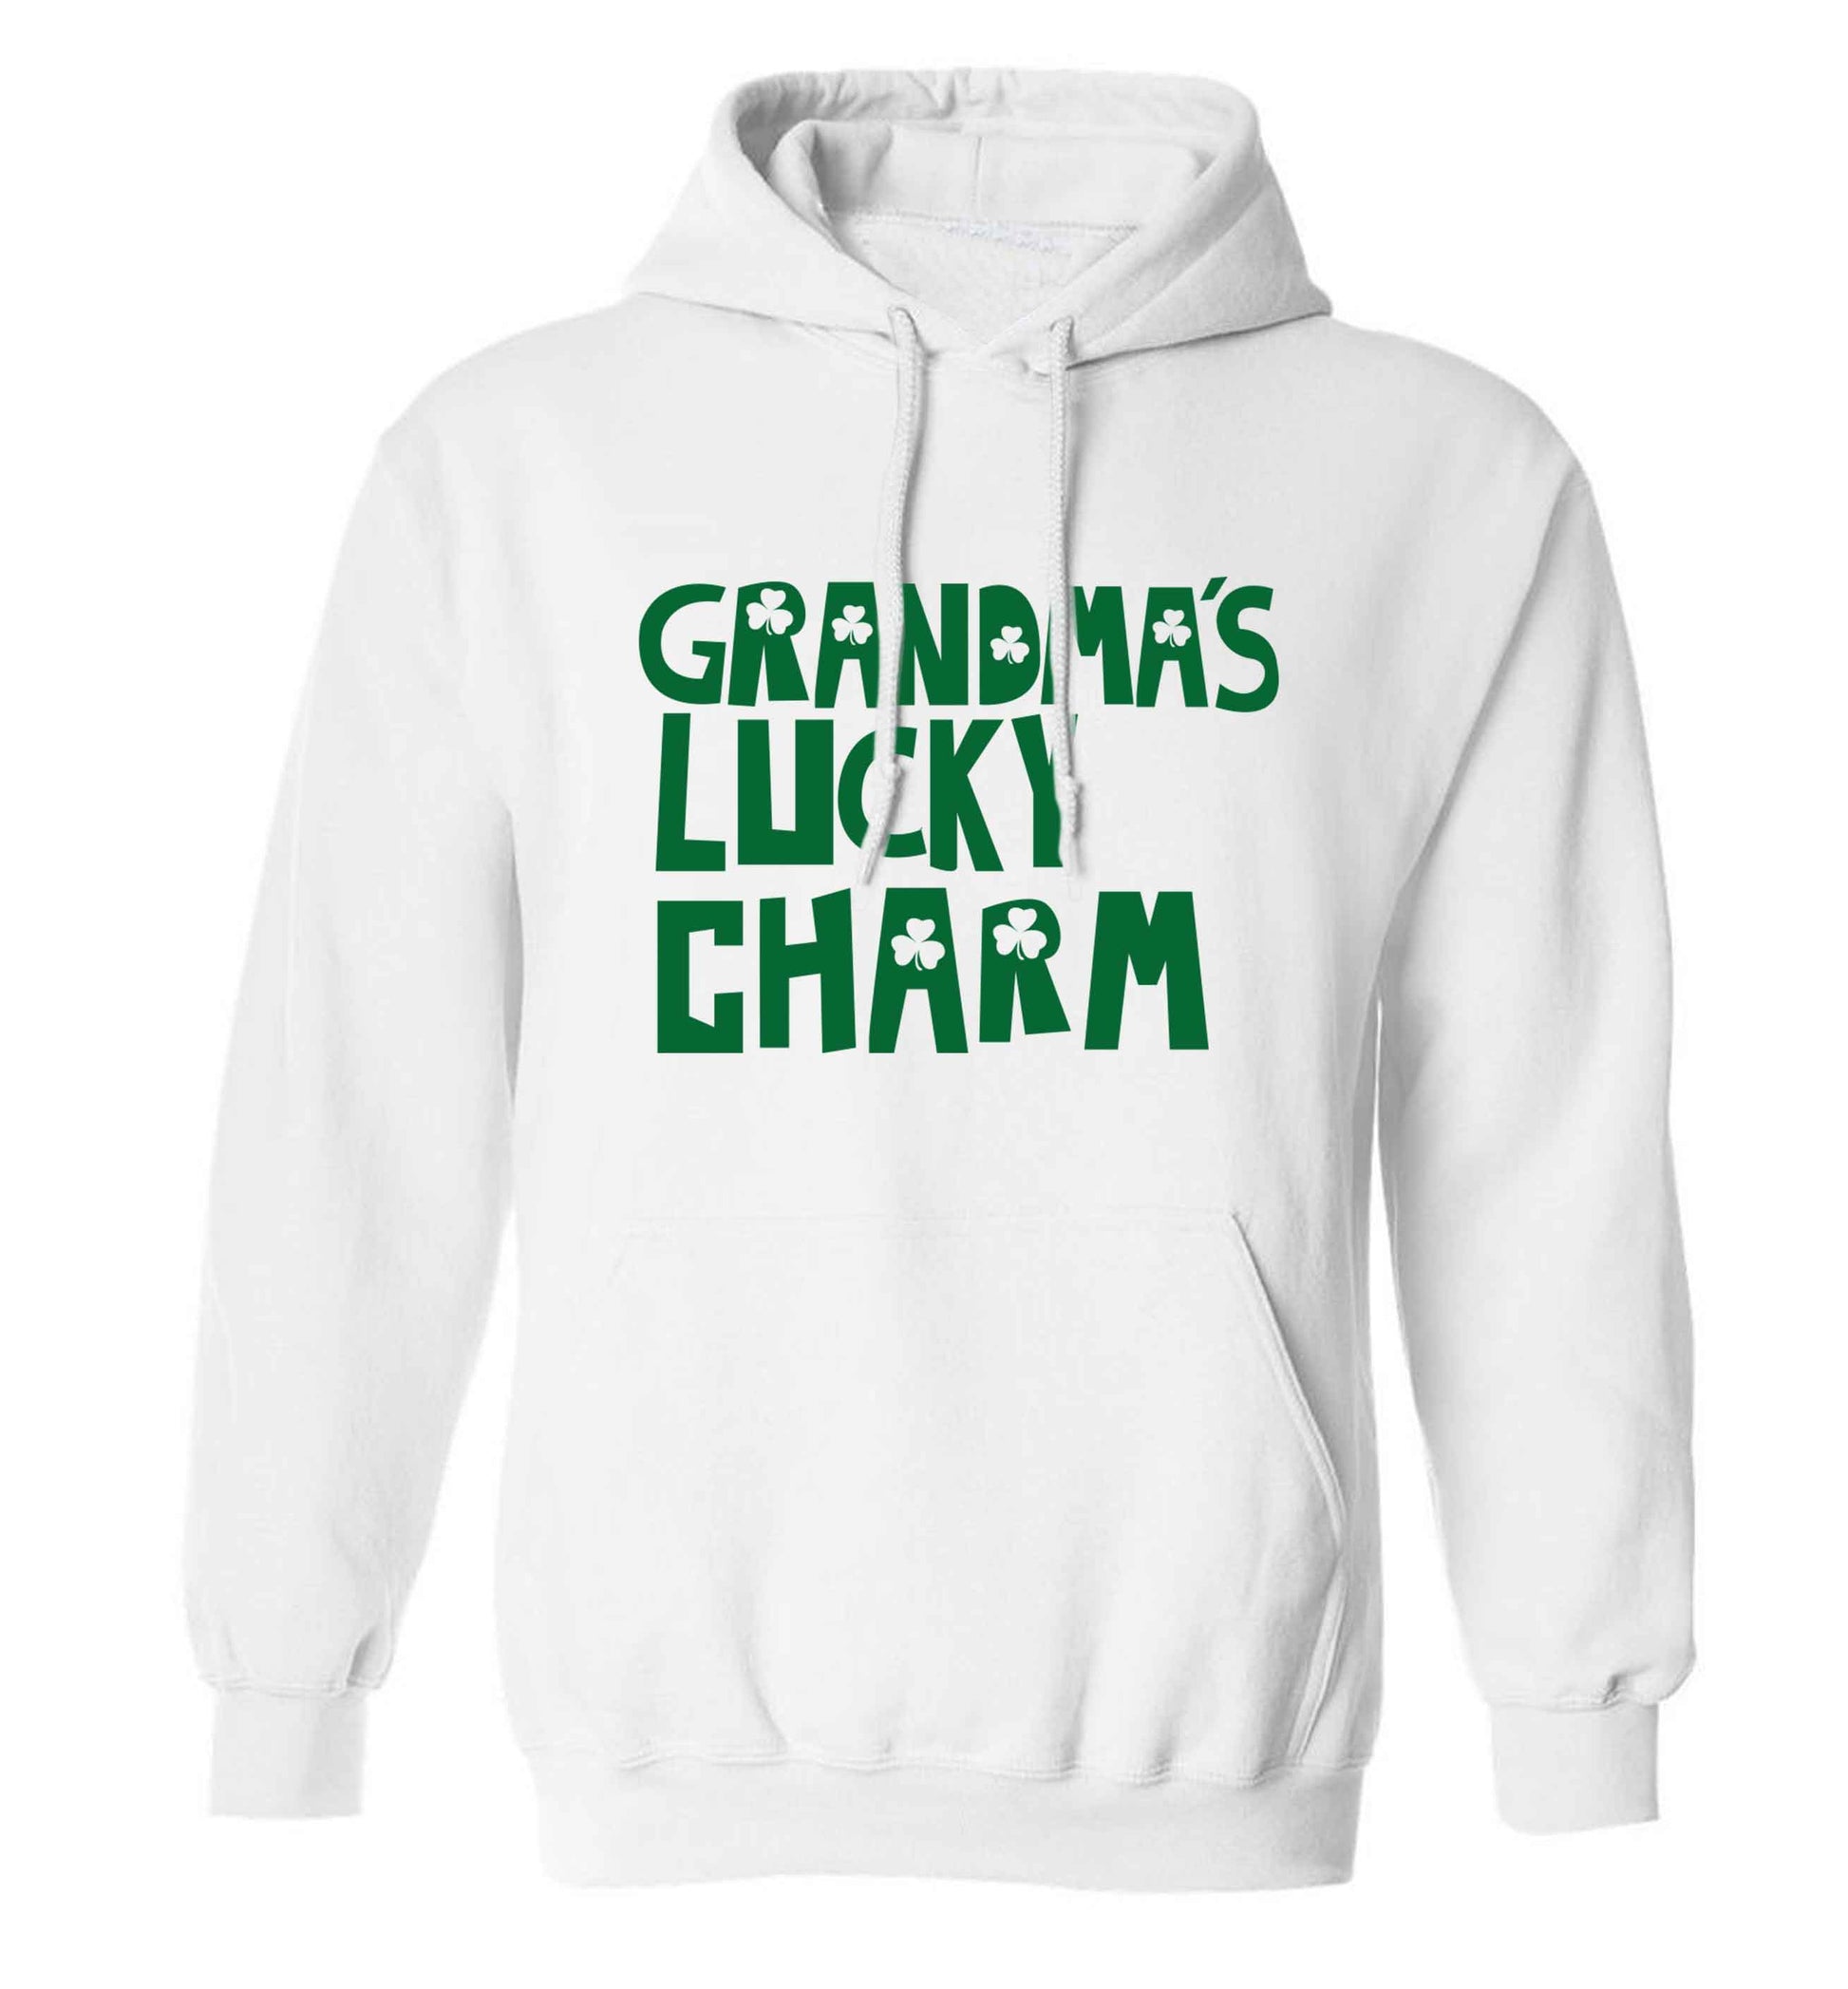 Grandma's lucky charm adults unisex white hoodie 2XL